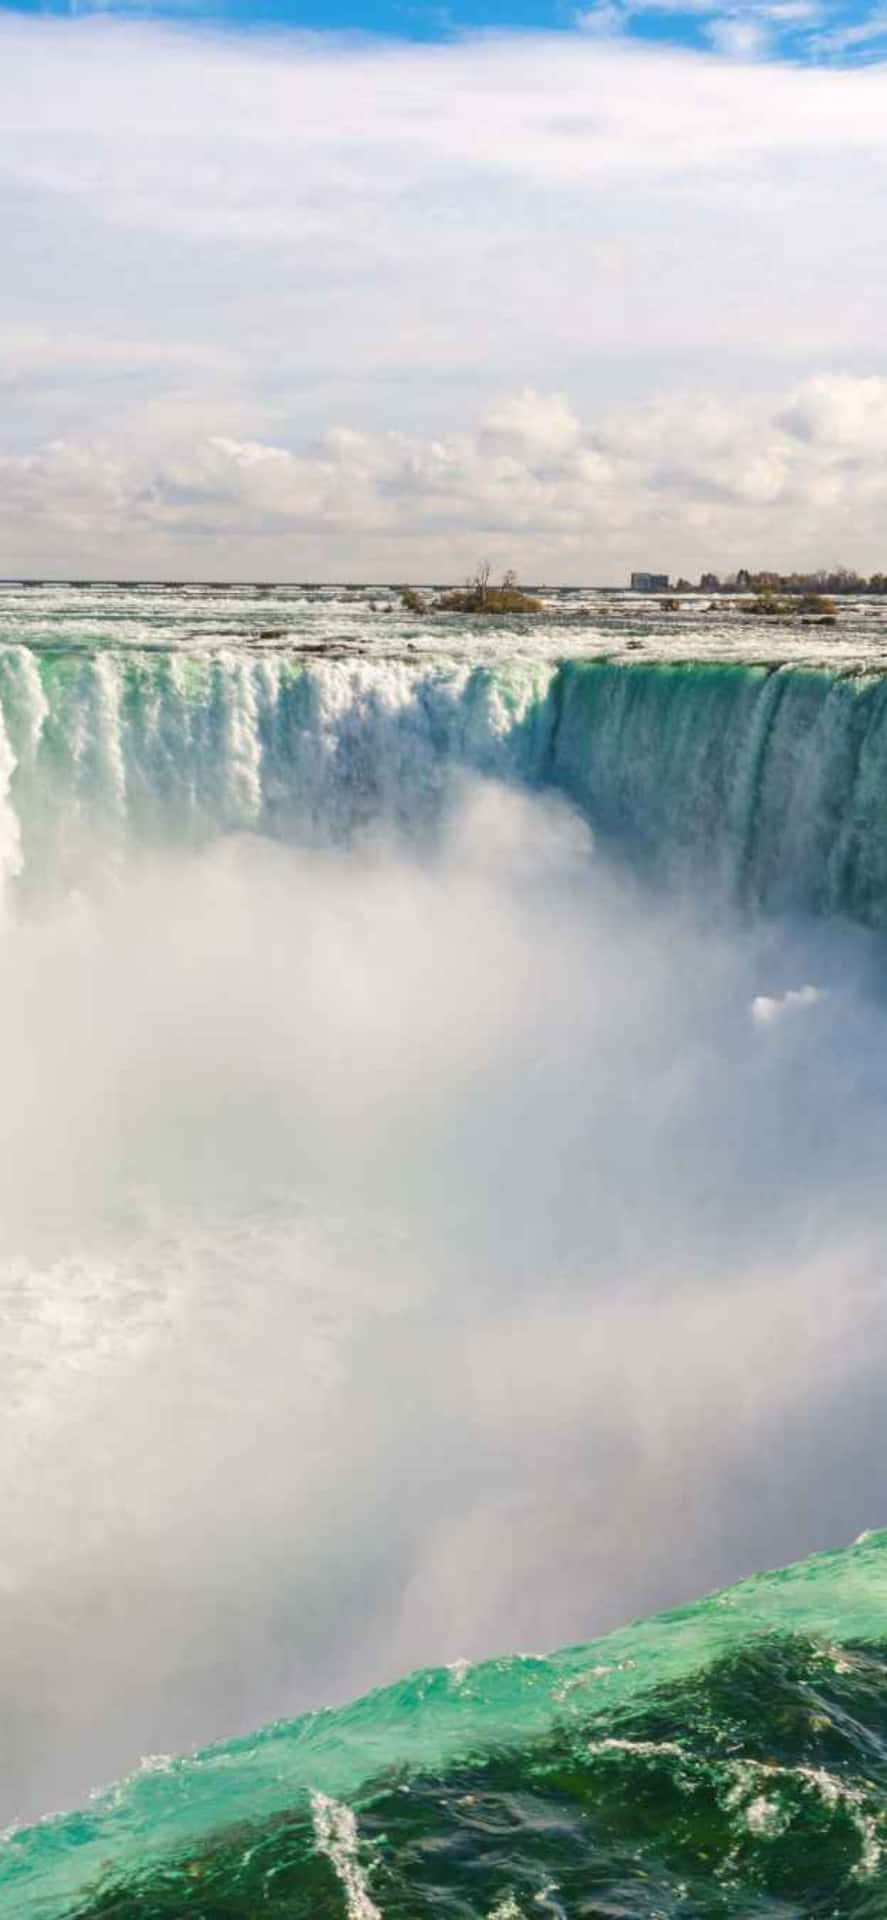 Iphonex Bakgrundsbild Om Niagarafallen Destinationen.